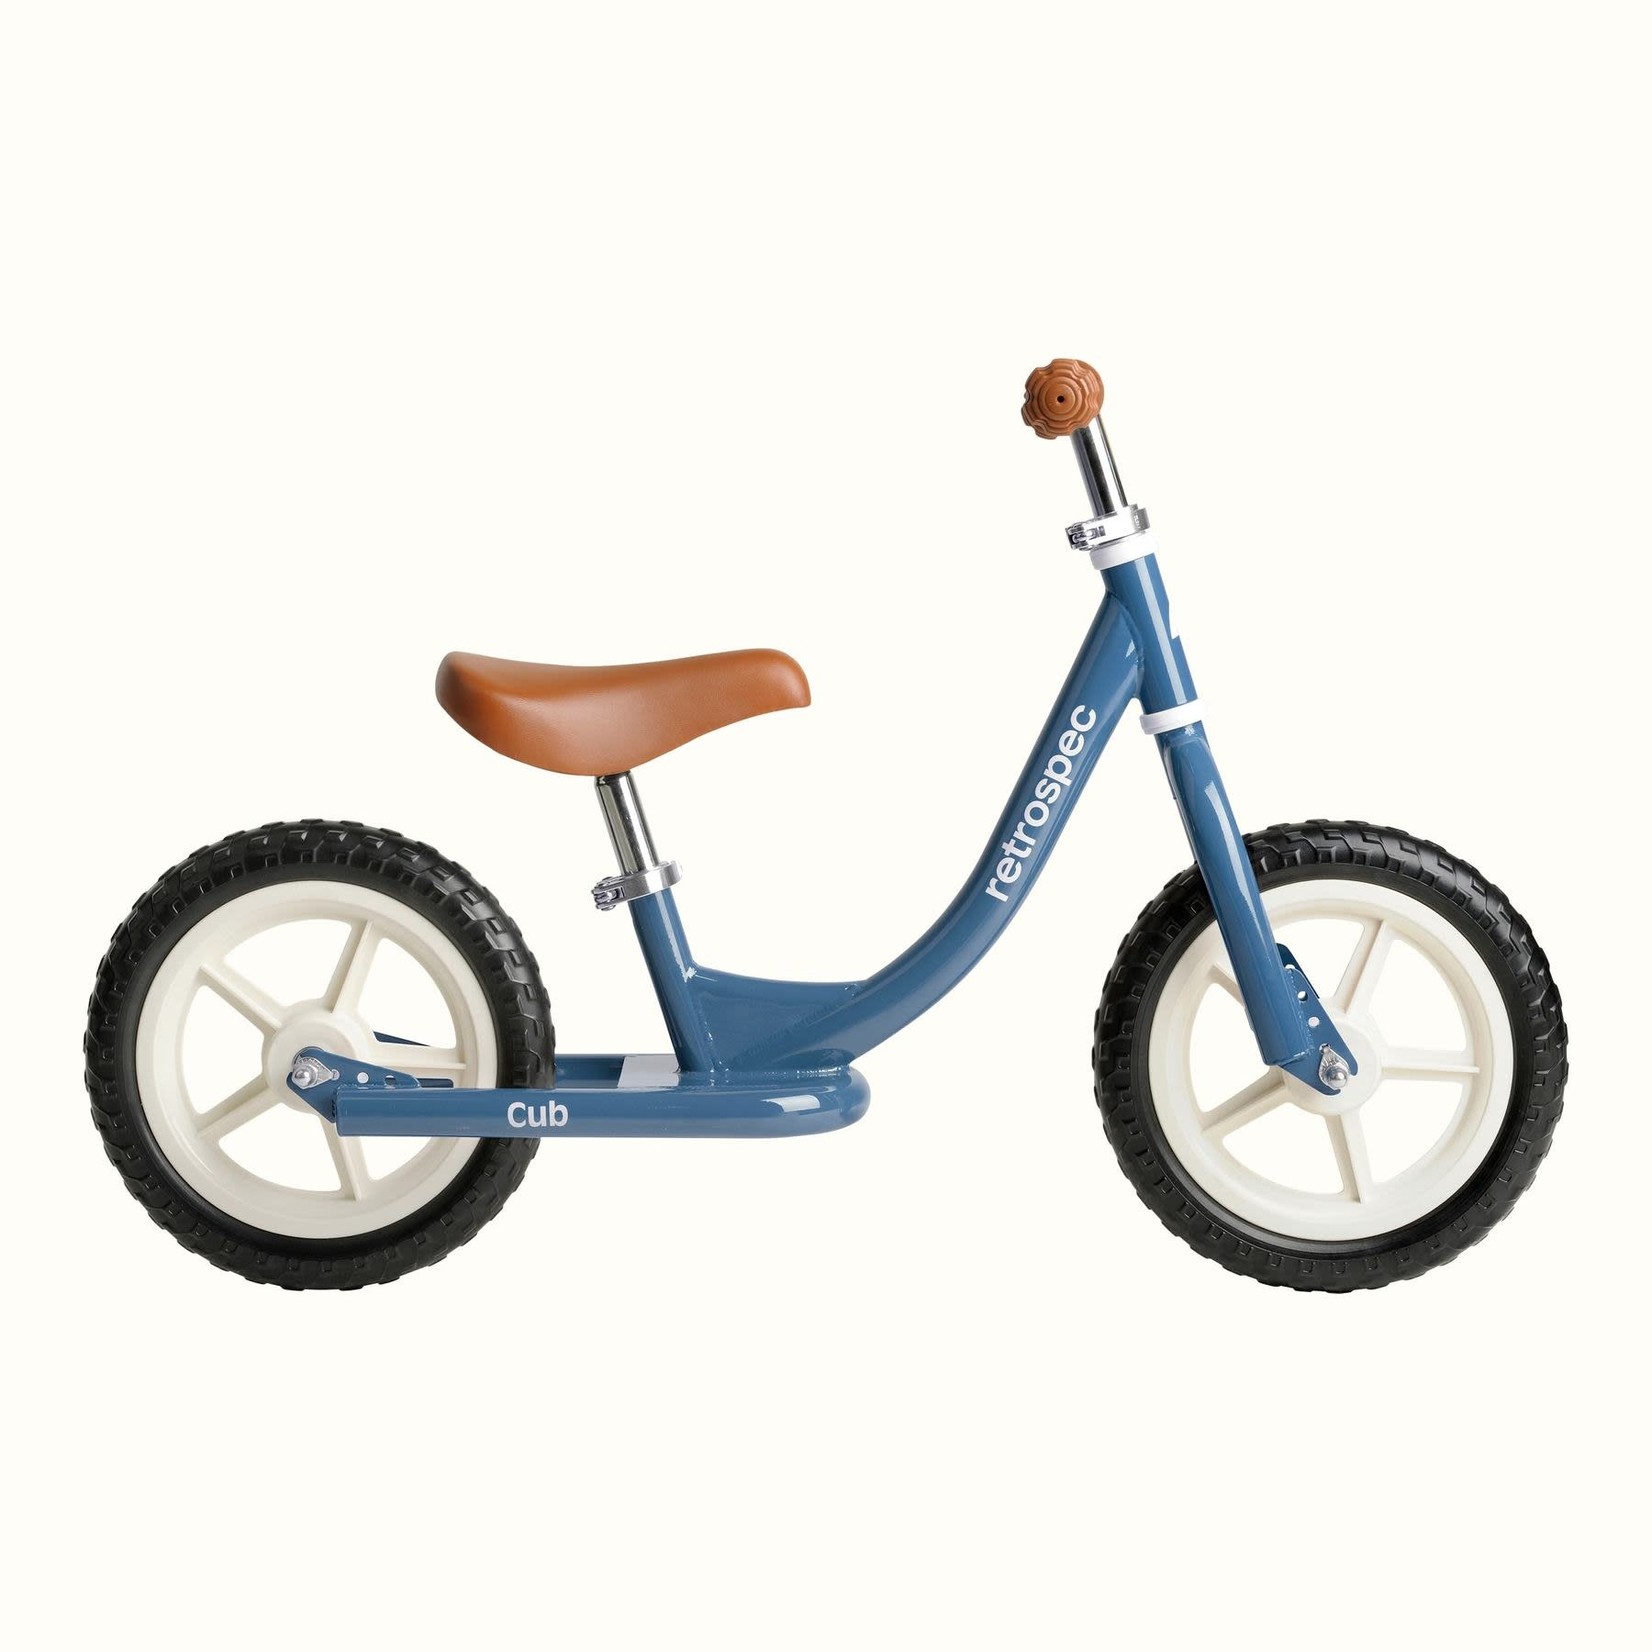 Retrospec Cub Balance Bike